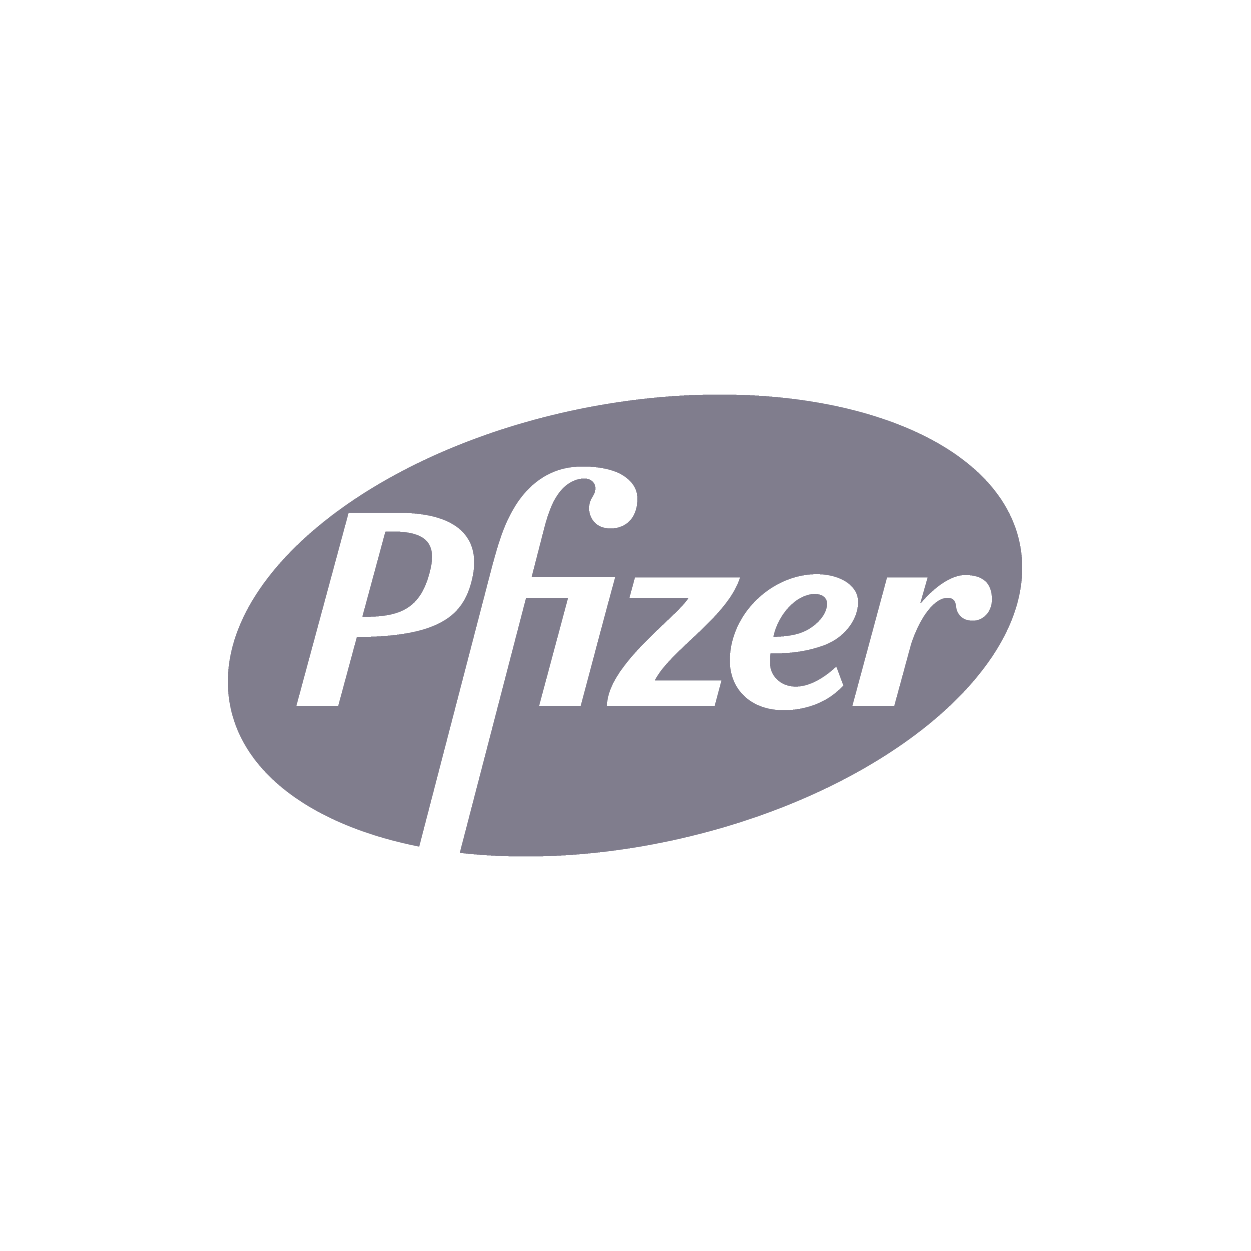 cindy solomon leadership keynote client Pfizer